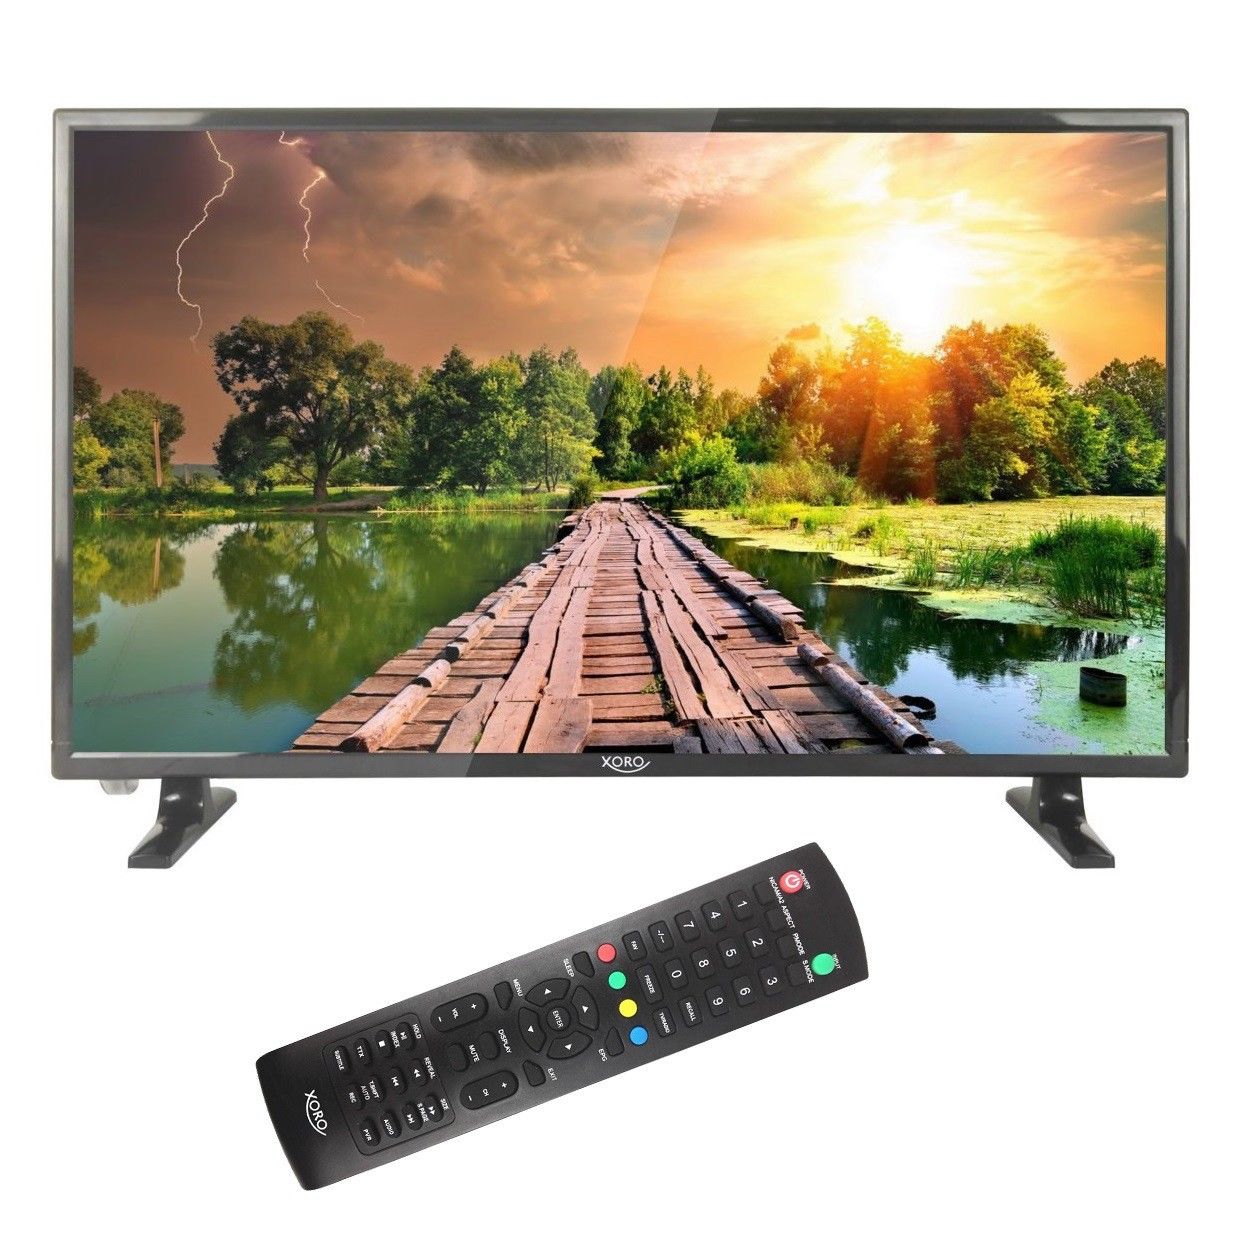 Xoro 2447 LED LCD TV 24 Zoll + DVB-T2 + HD SAT Receiver +USB +Triple Tuner(2446)